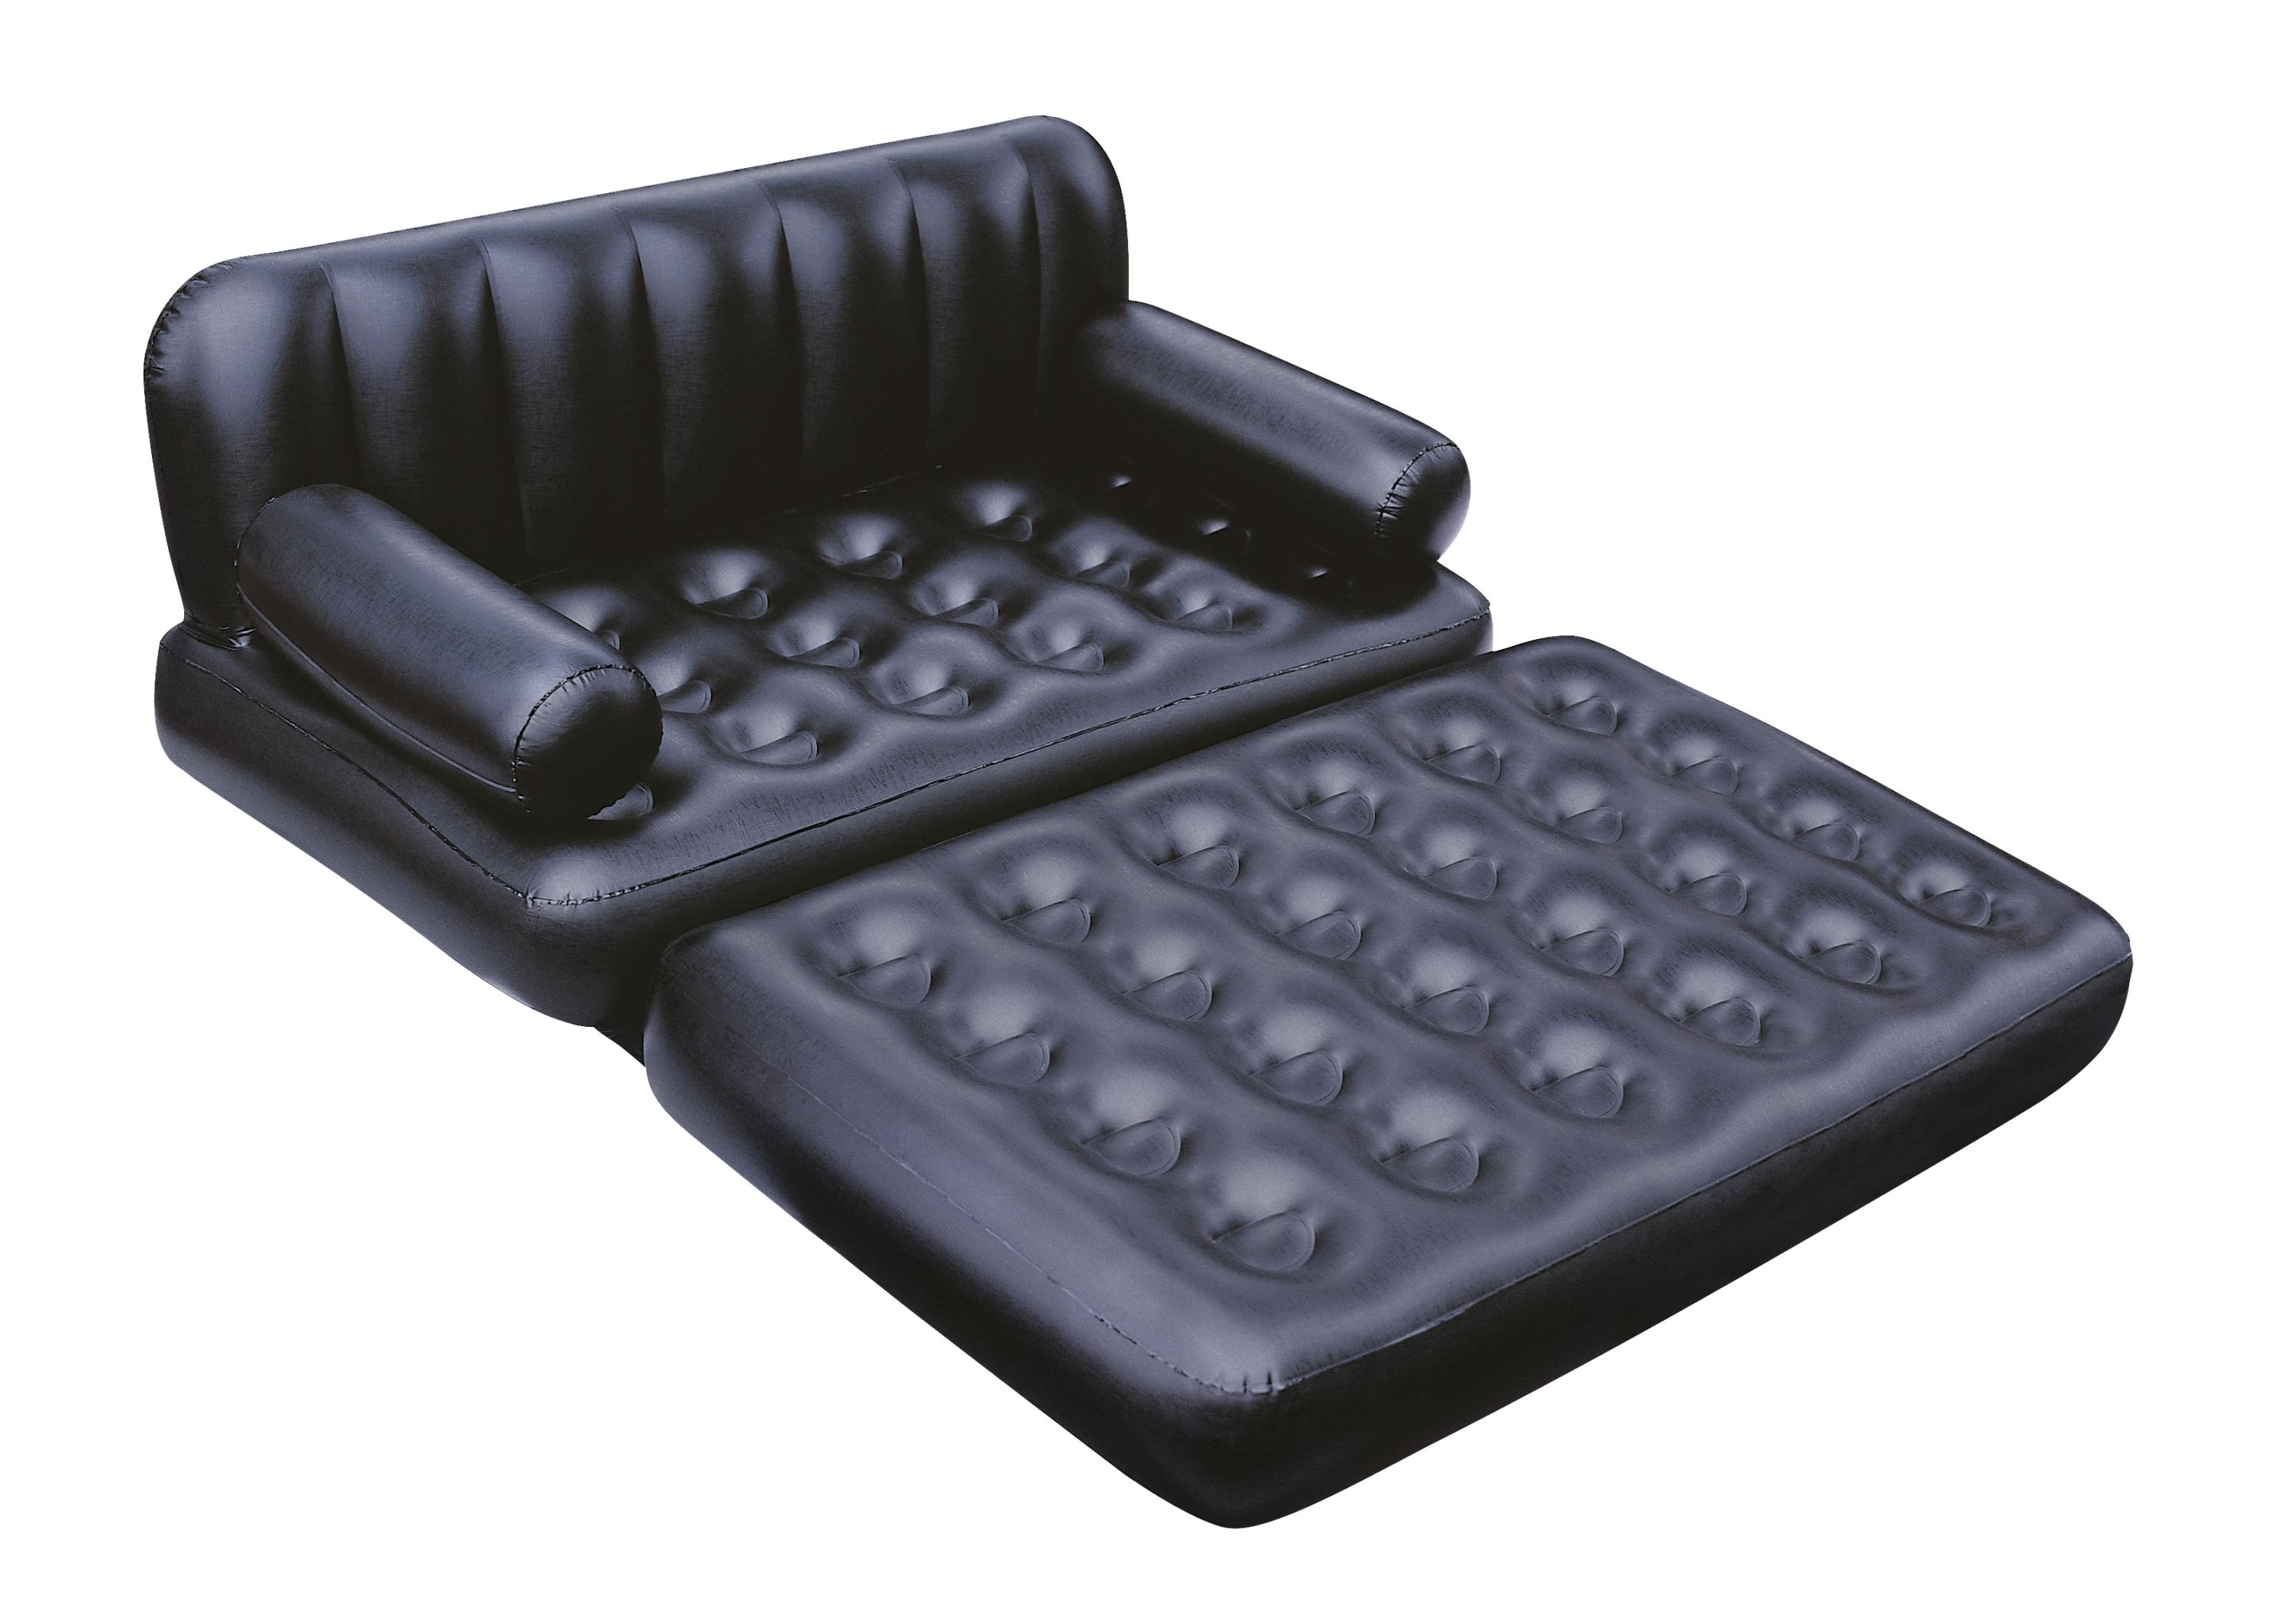 Надувной диван-трансформер Double 5-in-1 Multifunctional Couch 188х152х64 см (черный)без насоса, Bestway 75054BWу